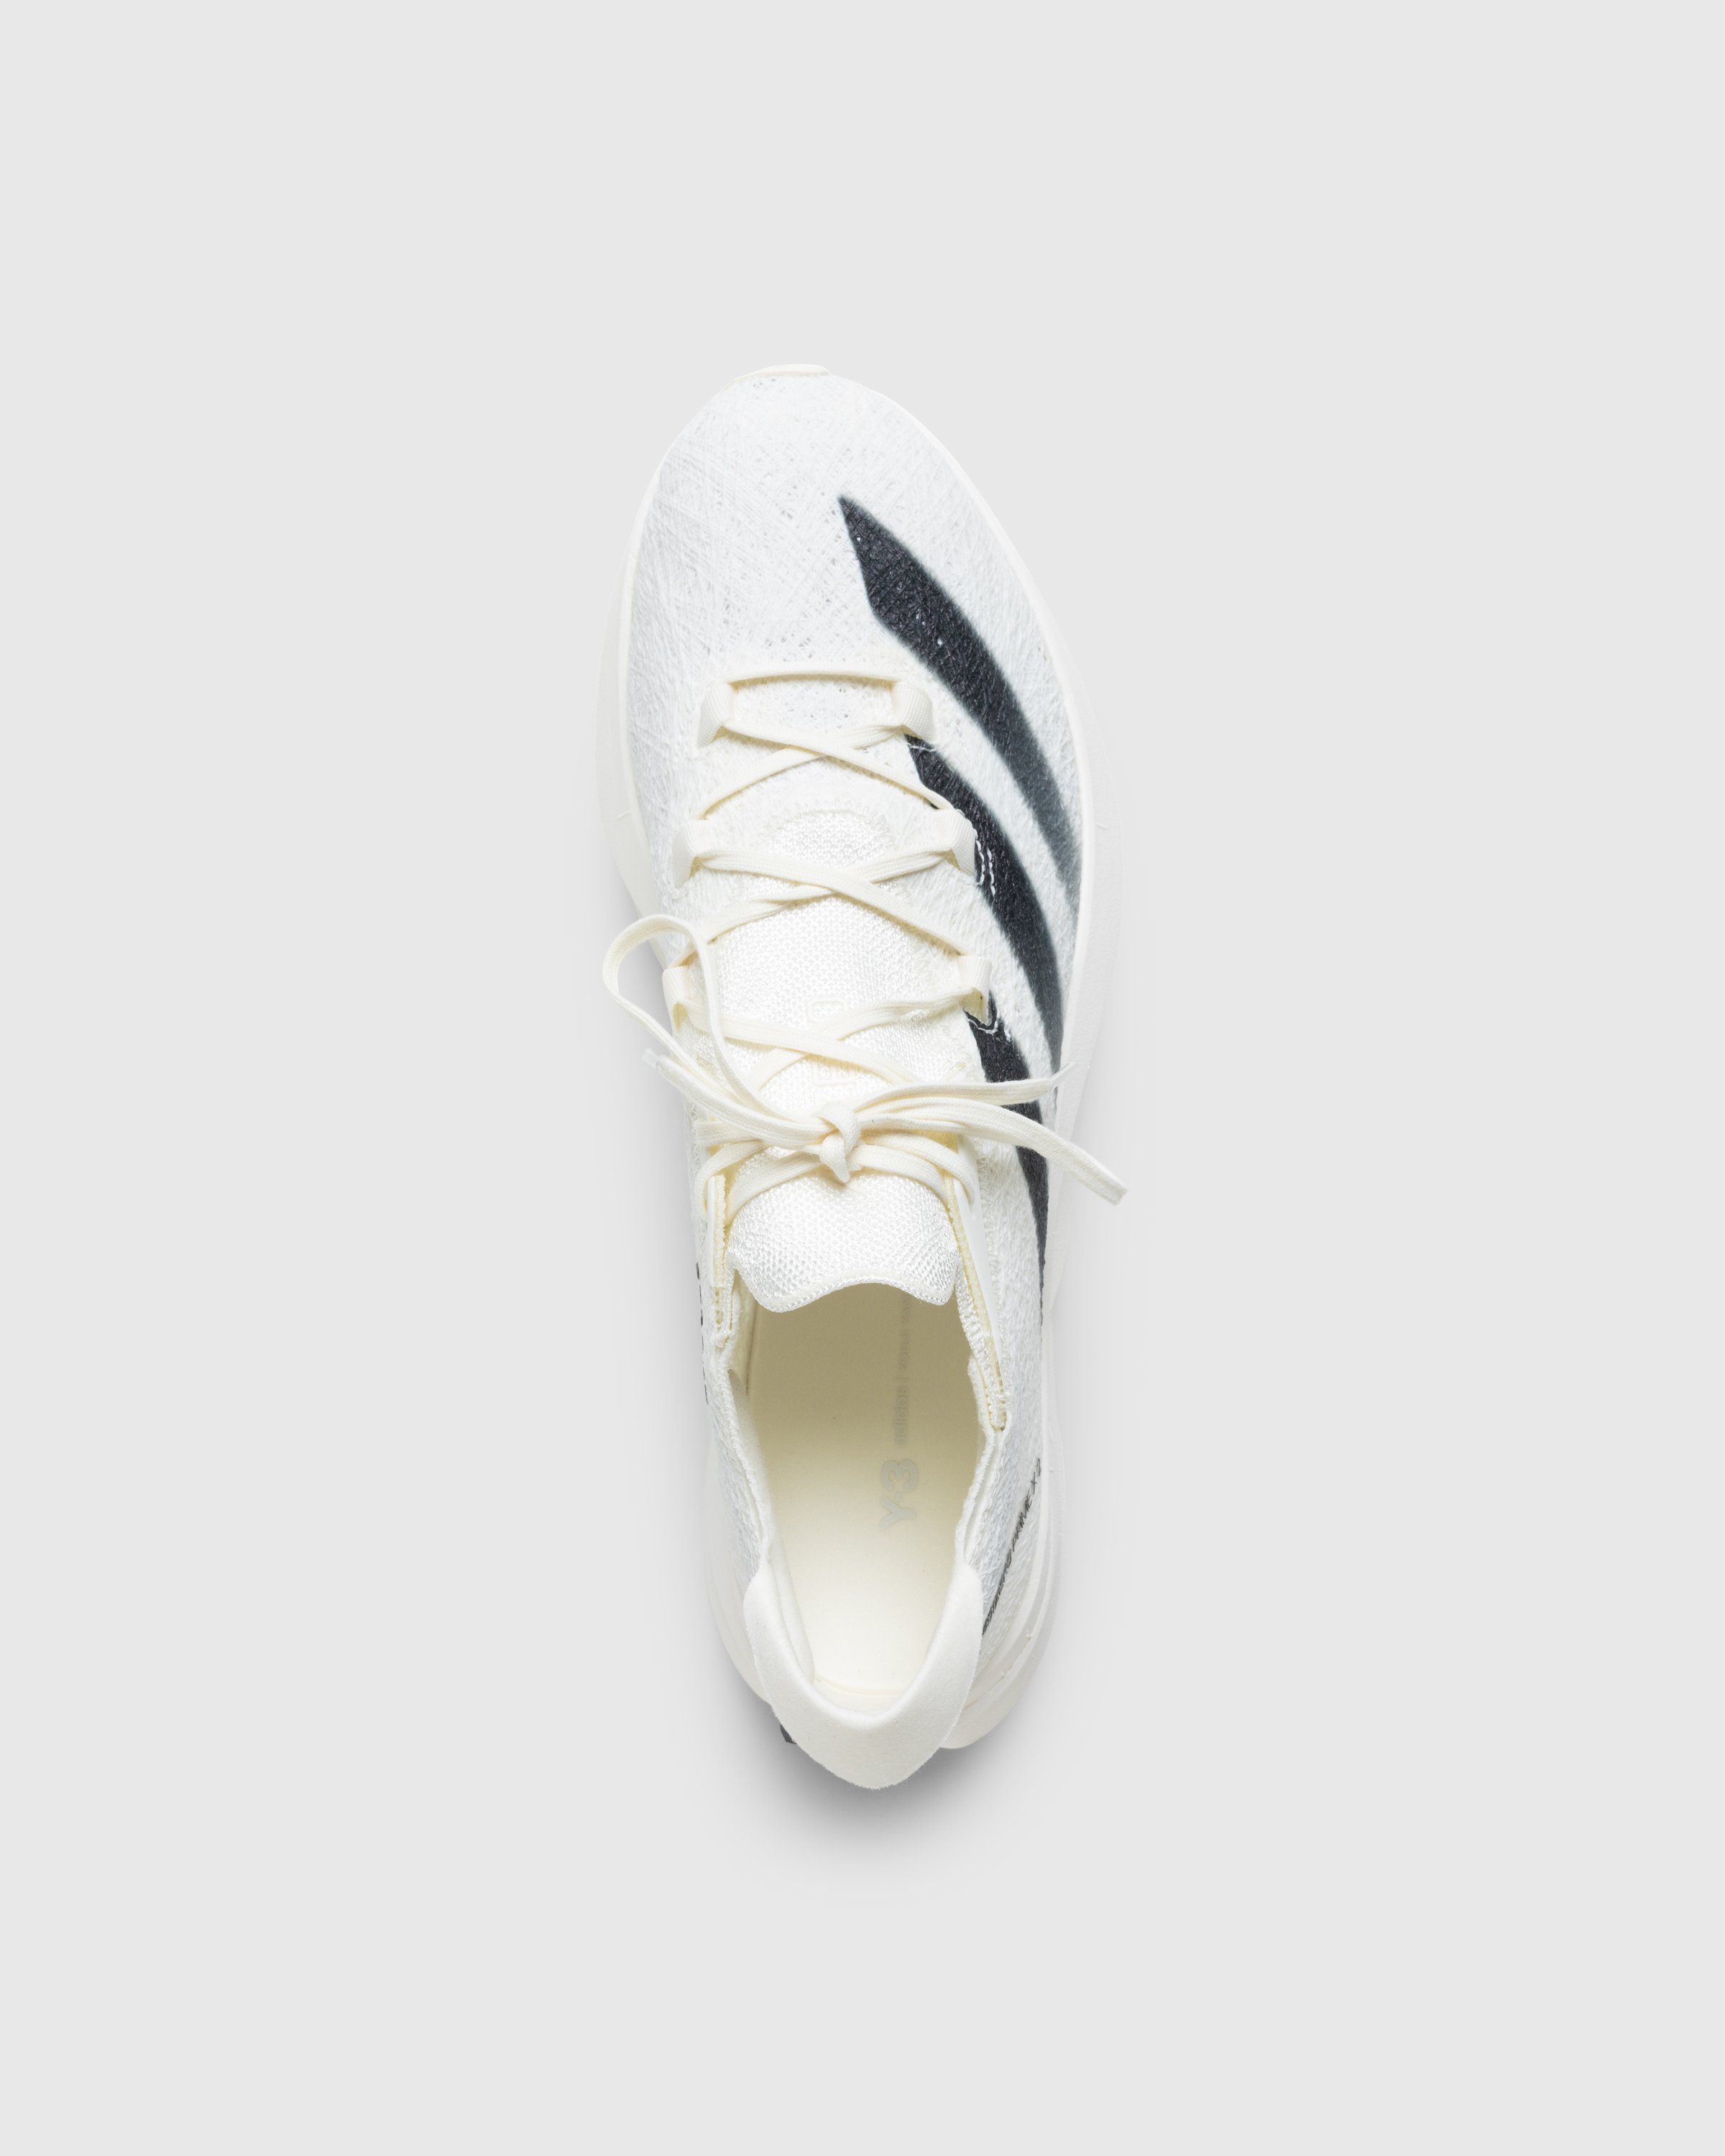 Y-3 - Prime X 2 Strun Owhite/Cblack/O - Footwear - White - Image 5